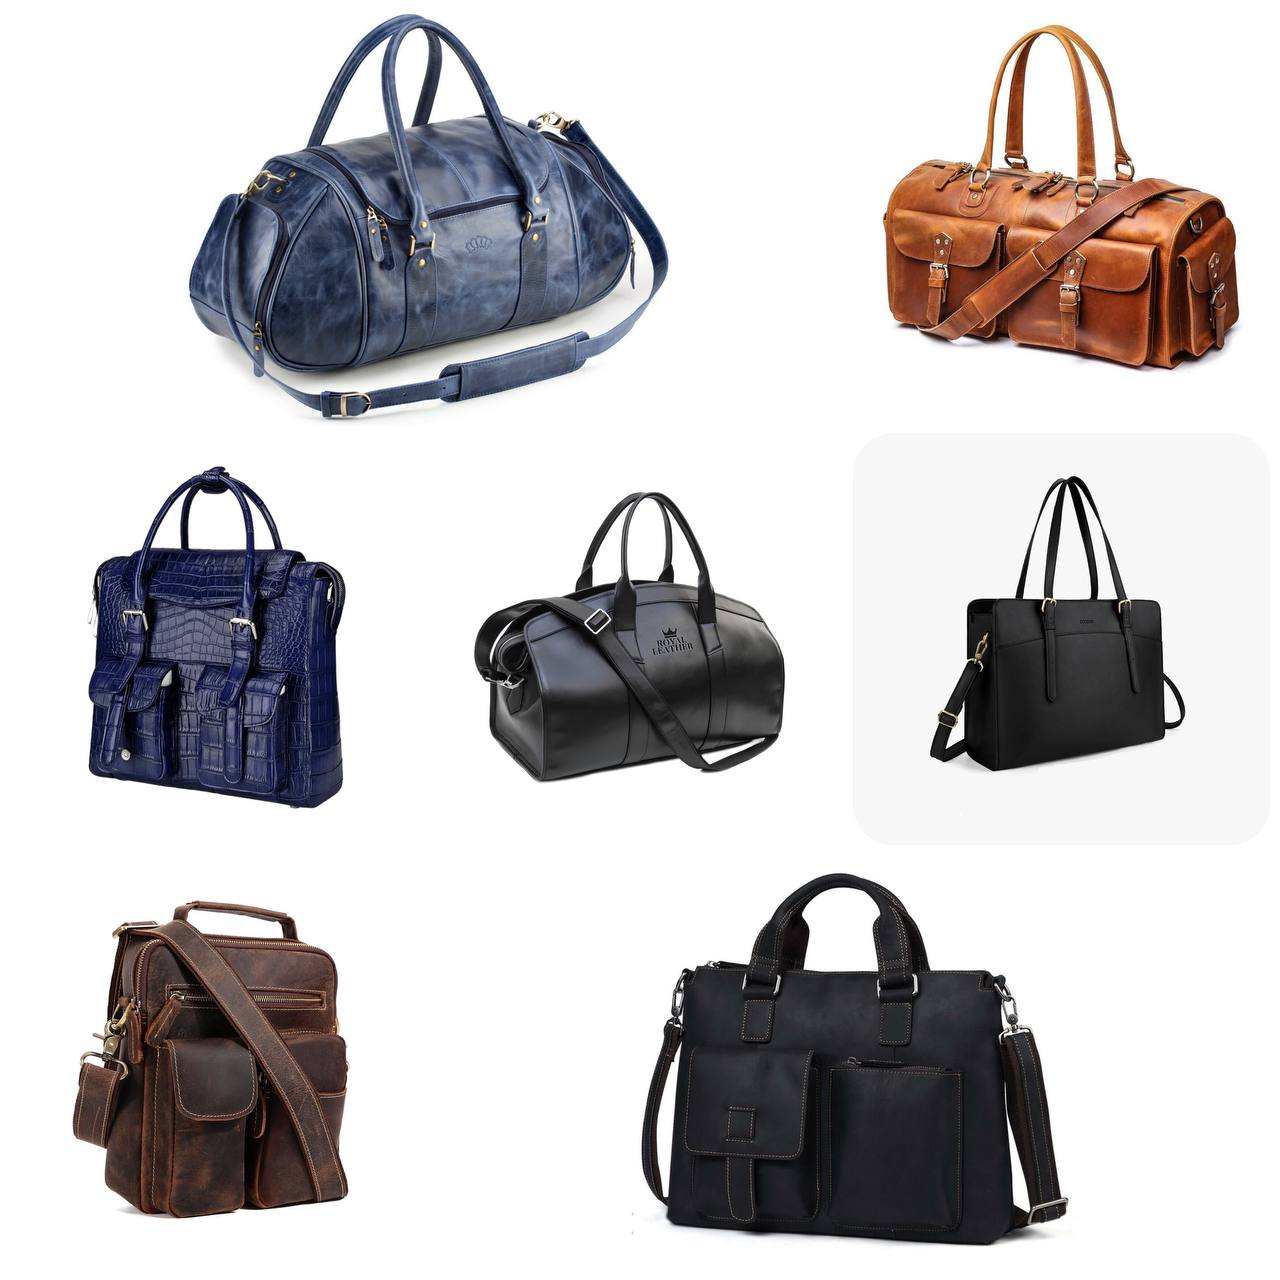 Ttravel/Sport Bags Patterns